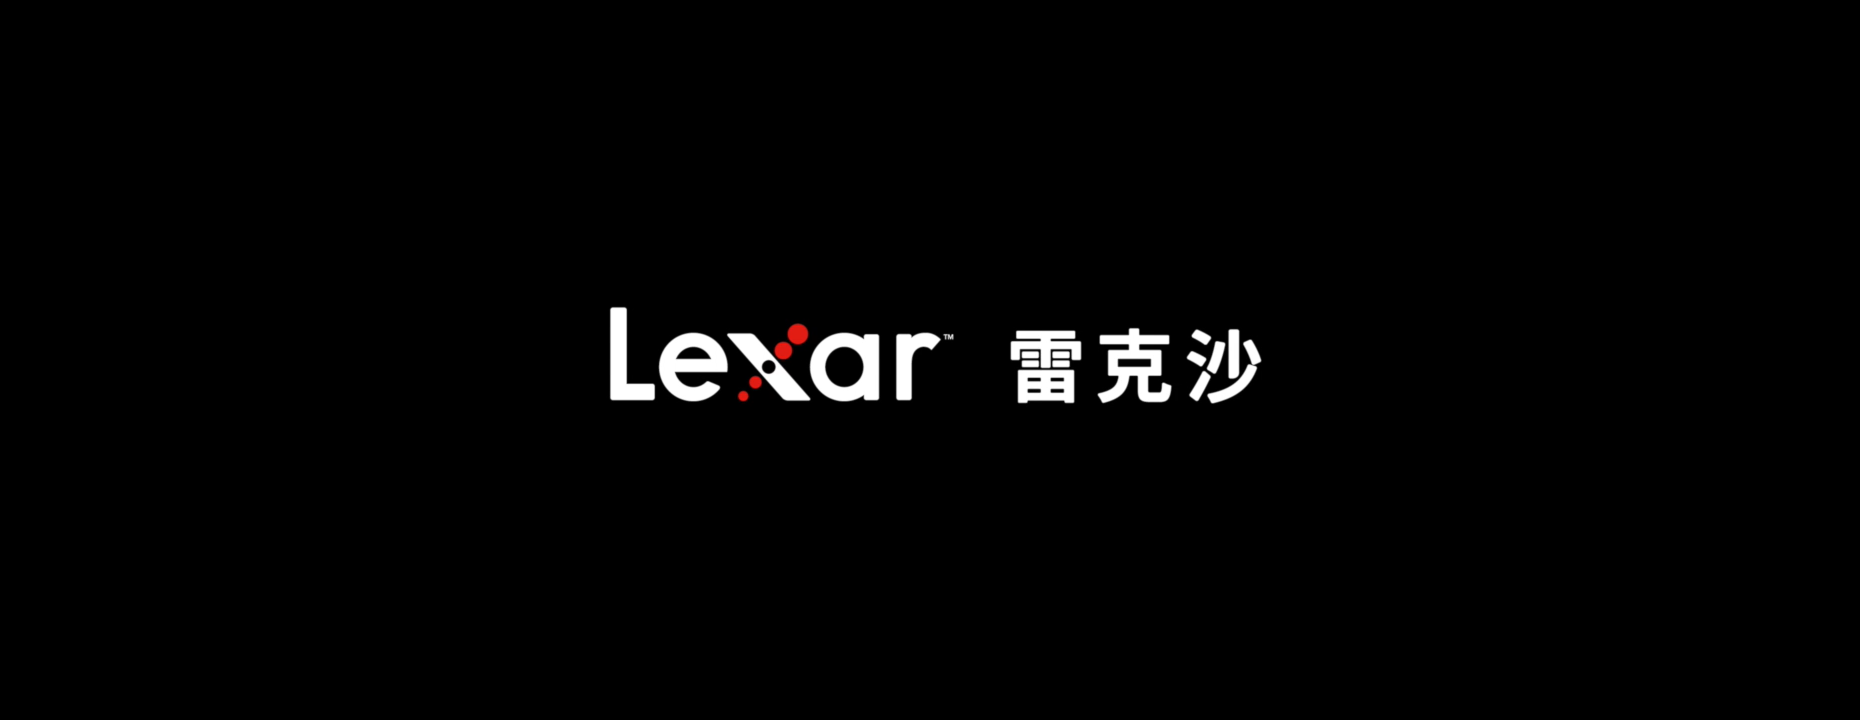 About Lexar banner